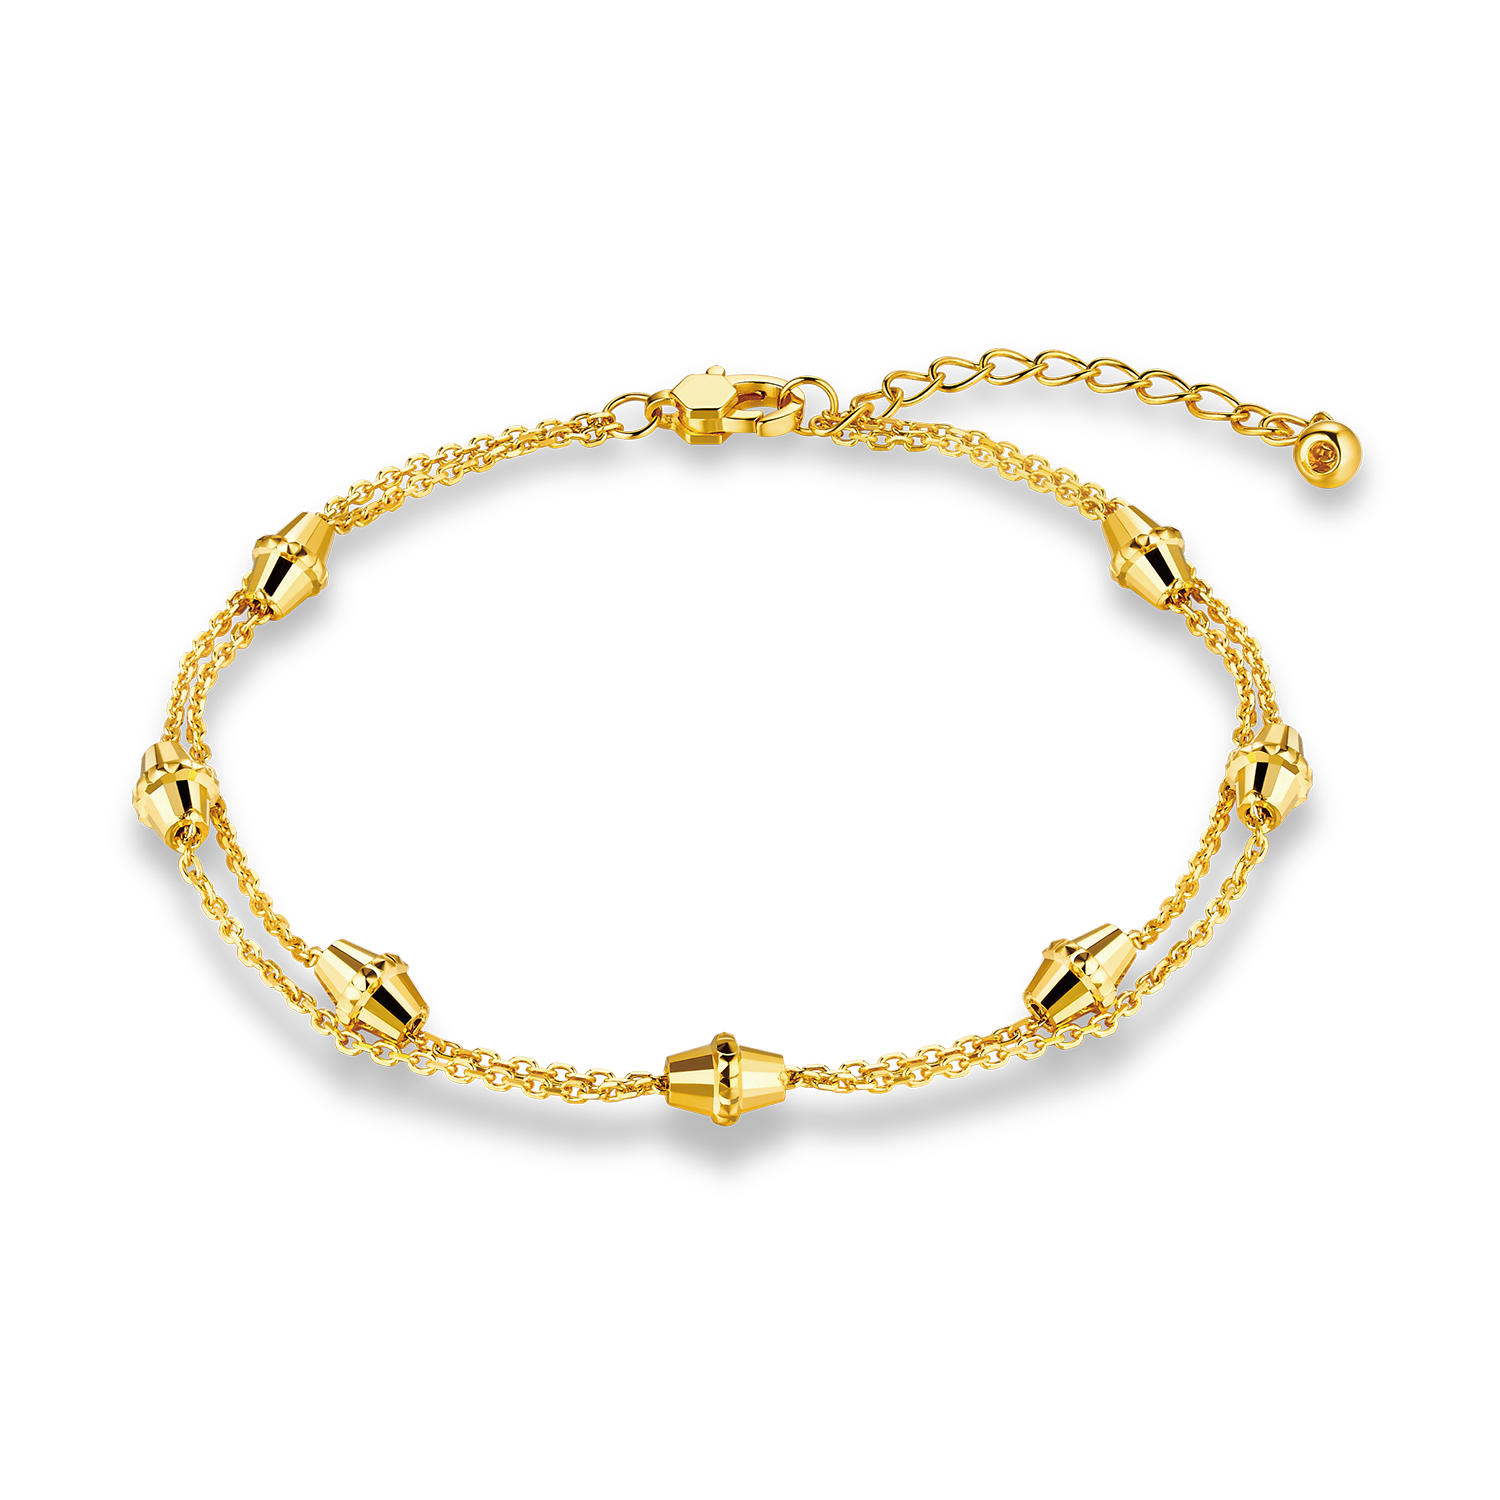 Goldstyle "Joy of Circle" Gold Bracelet